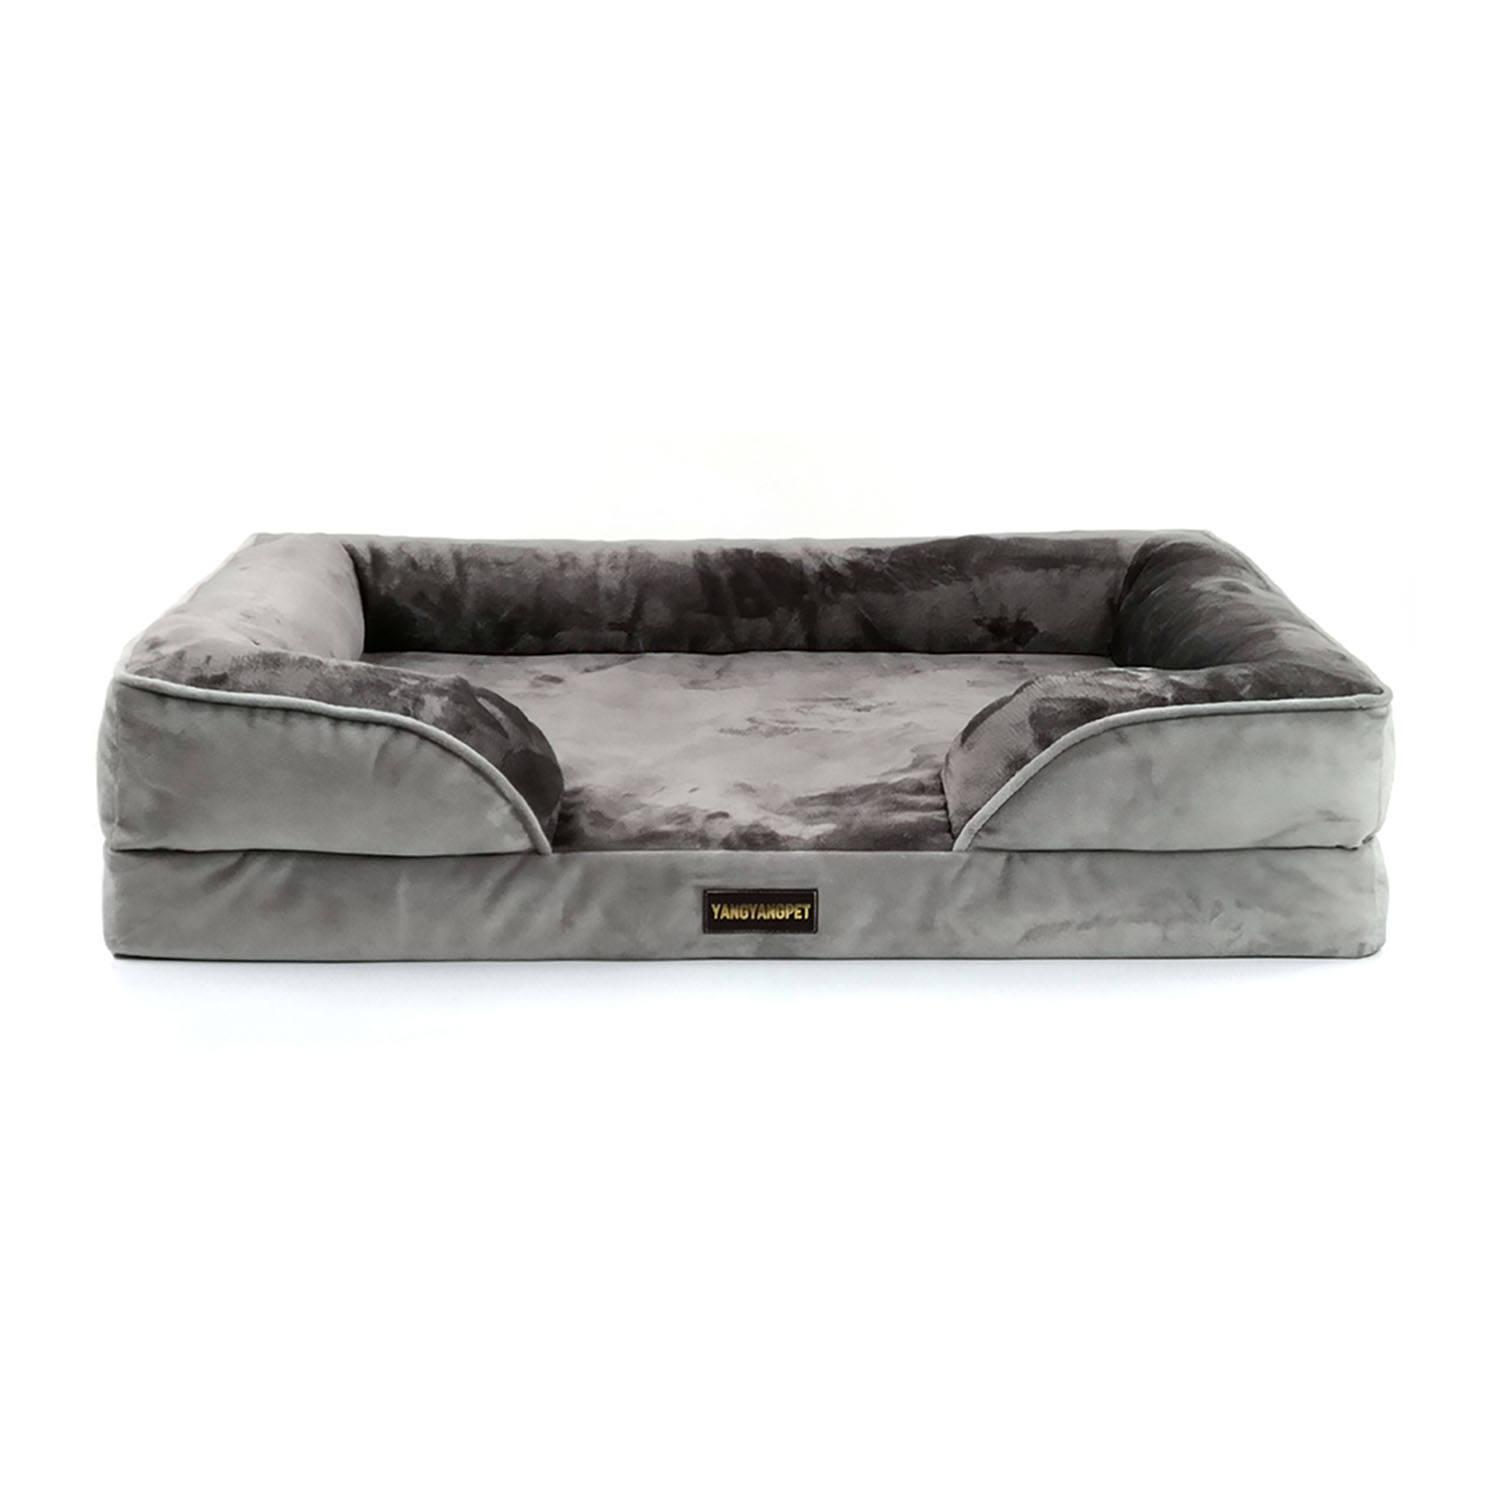 Customisable Dog Beds Dog Bed L Shape Black And White Dog Bed